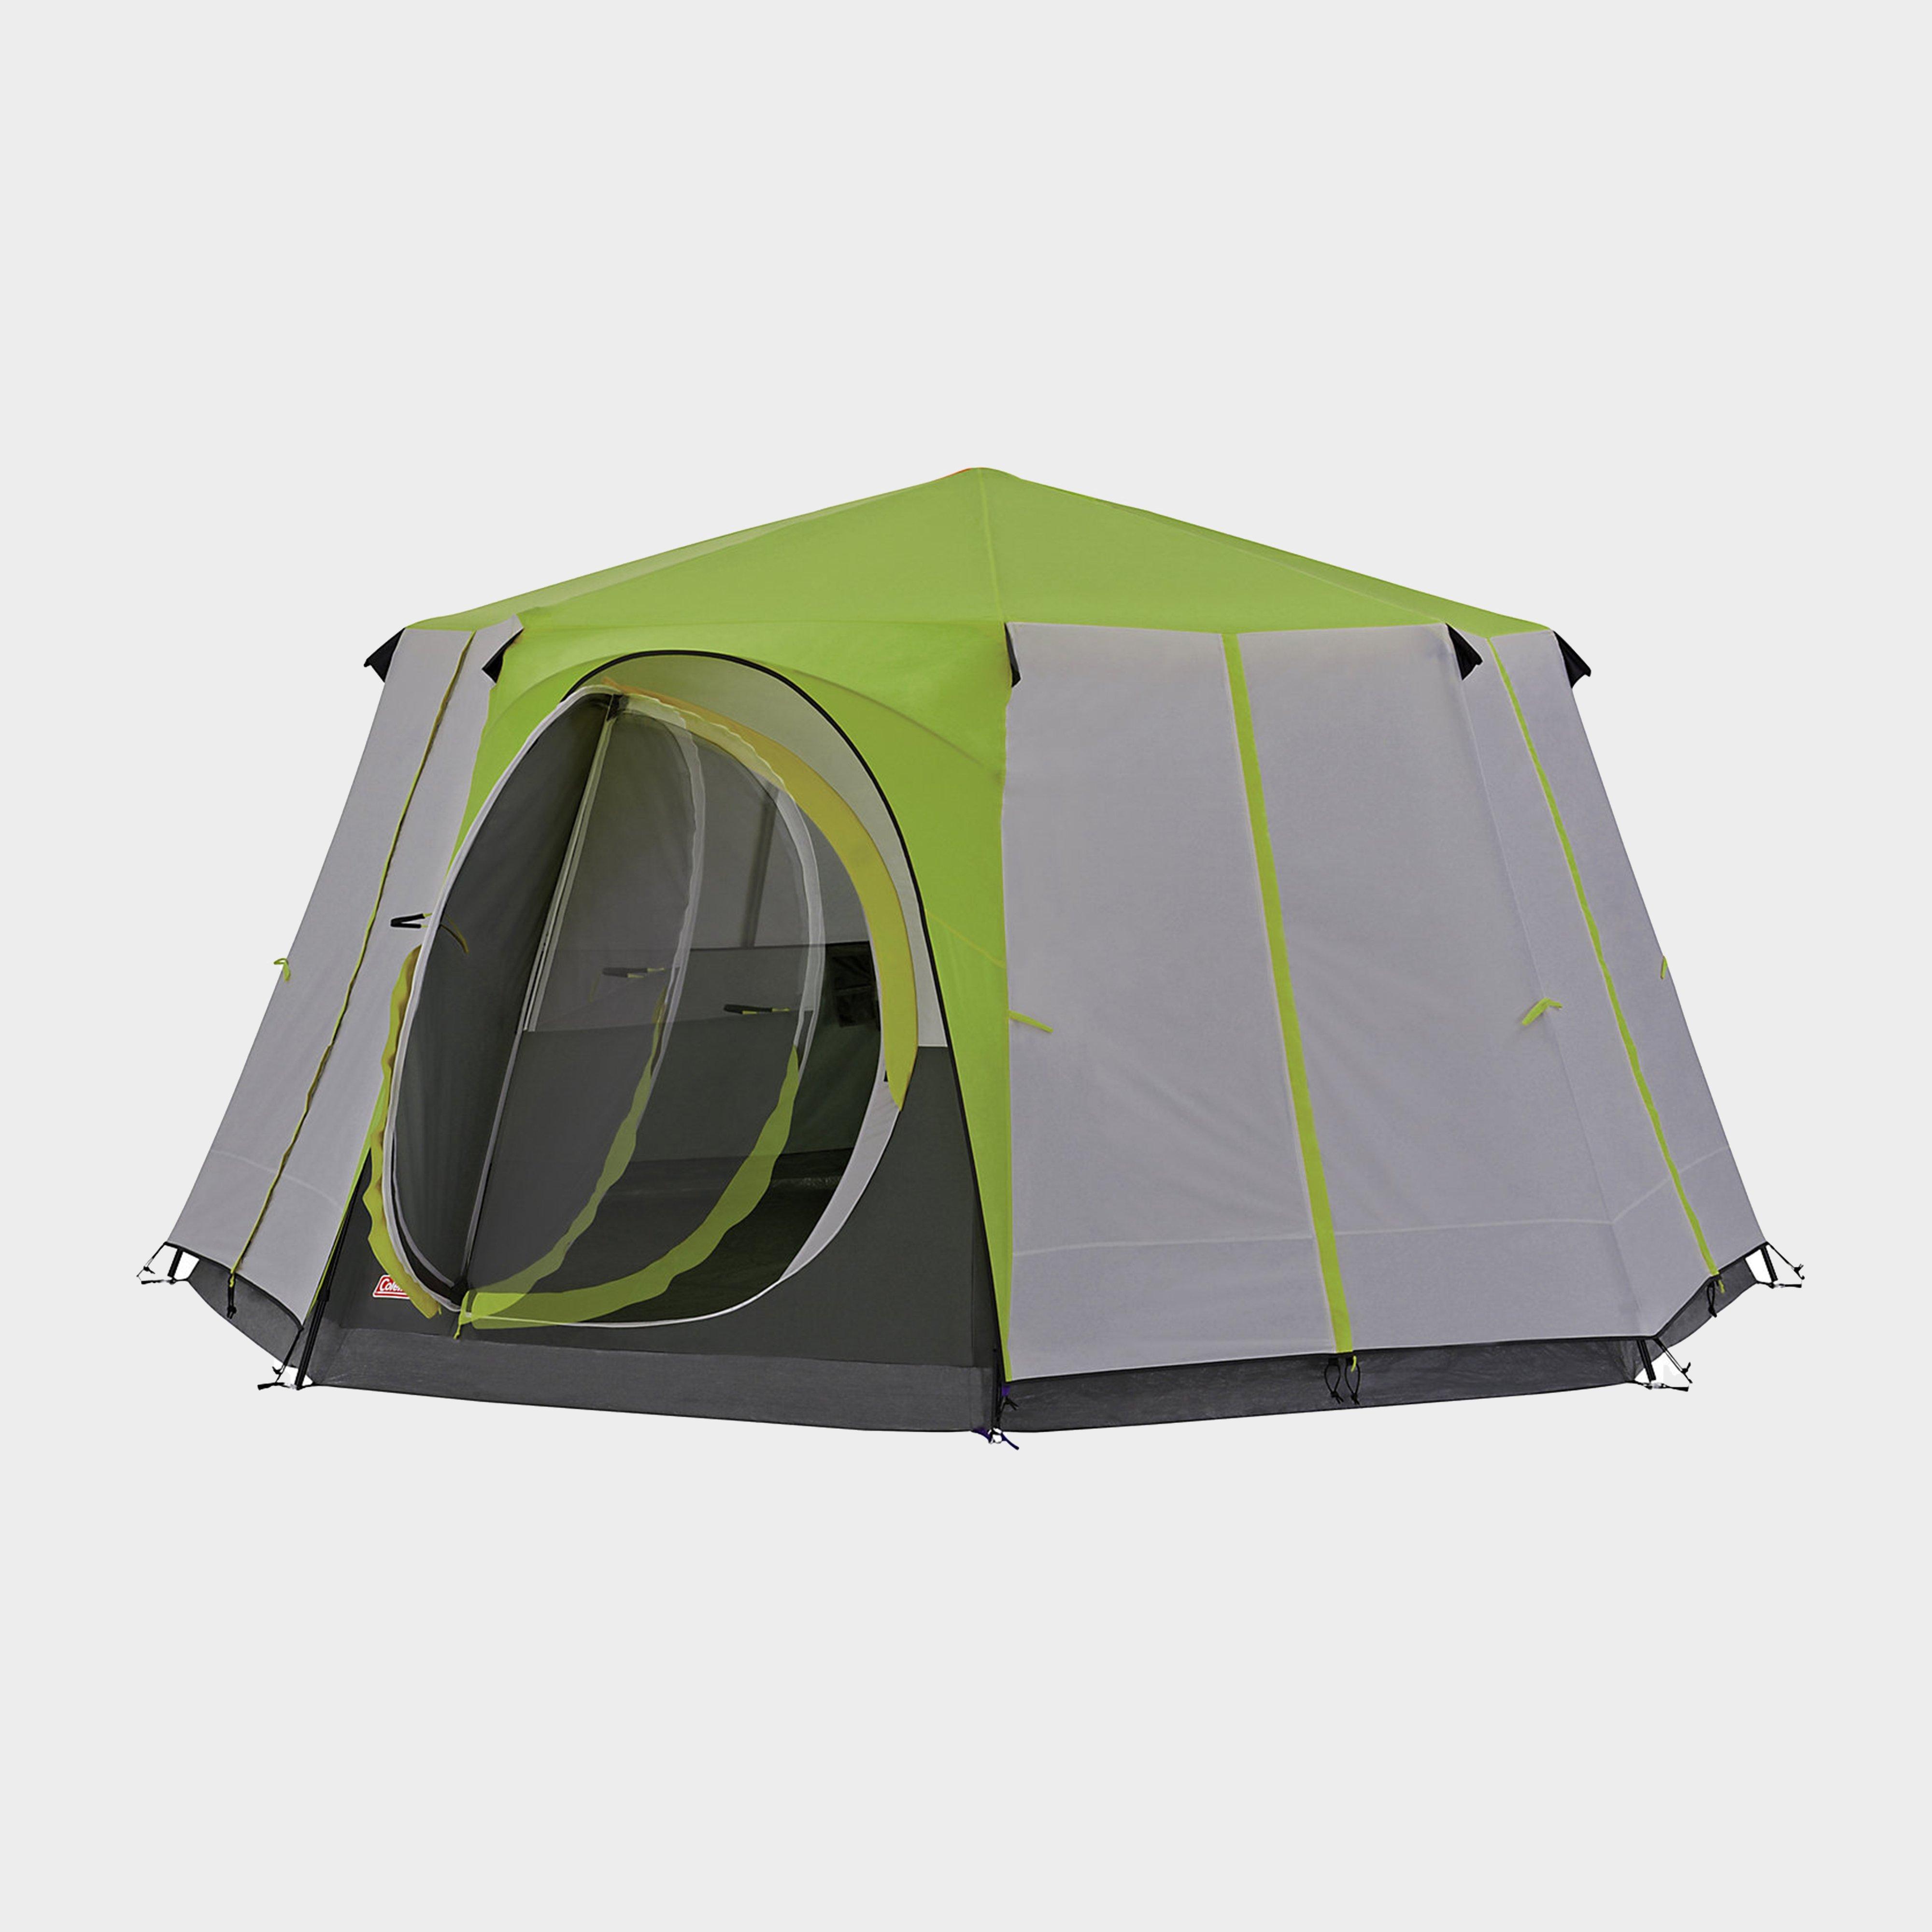 Coleman Cortes Octagon 8 Tent - Green/Grn, Green/GRN